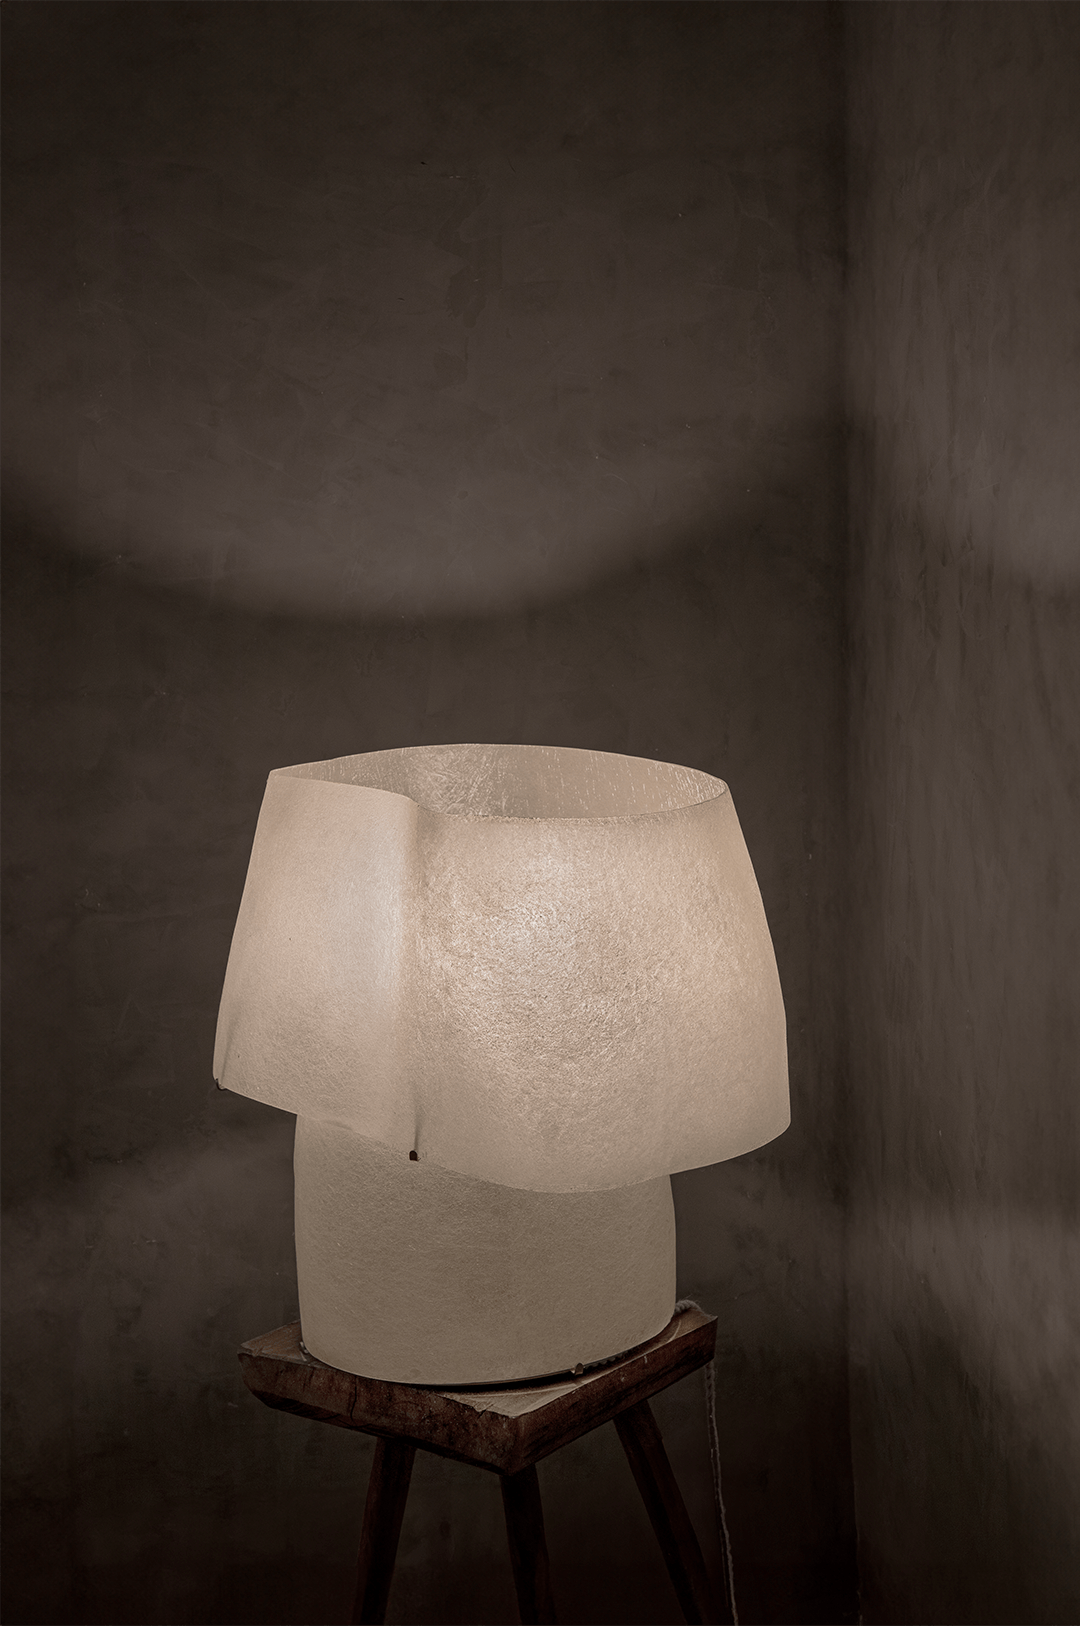 Kilzi lighting | Mush Chub fiberglass table lamp, a elegant designer lamp with soft organic shapes resembling a growing mushroom. Perfect for home decor.